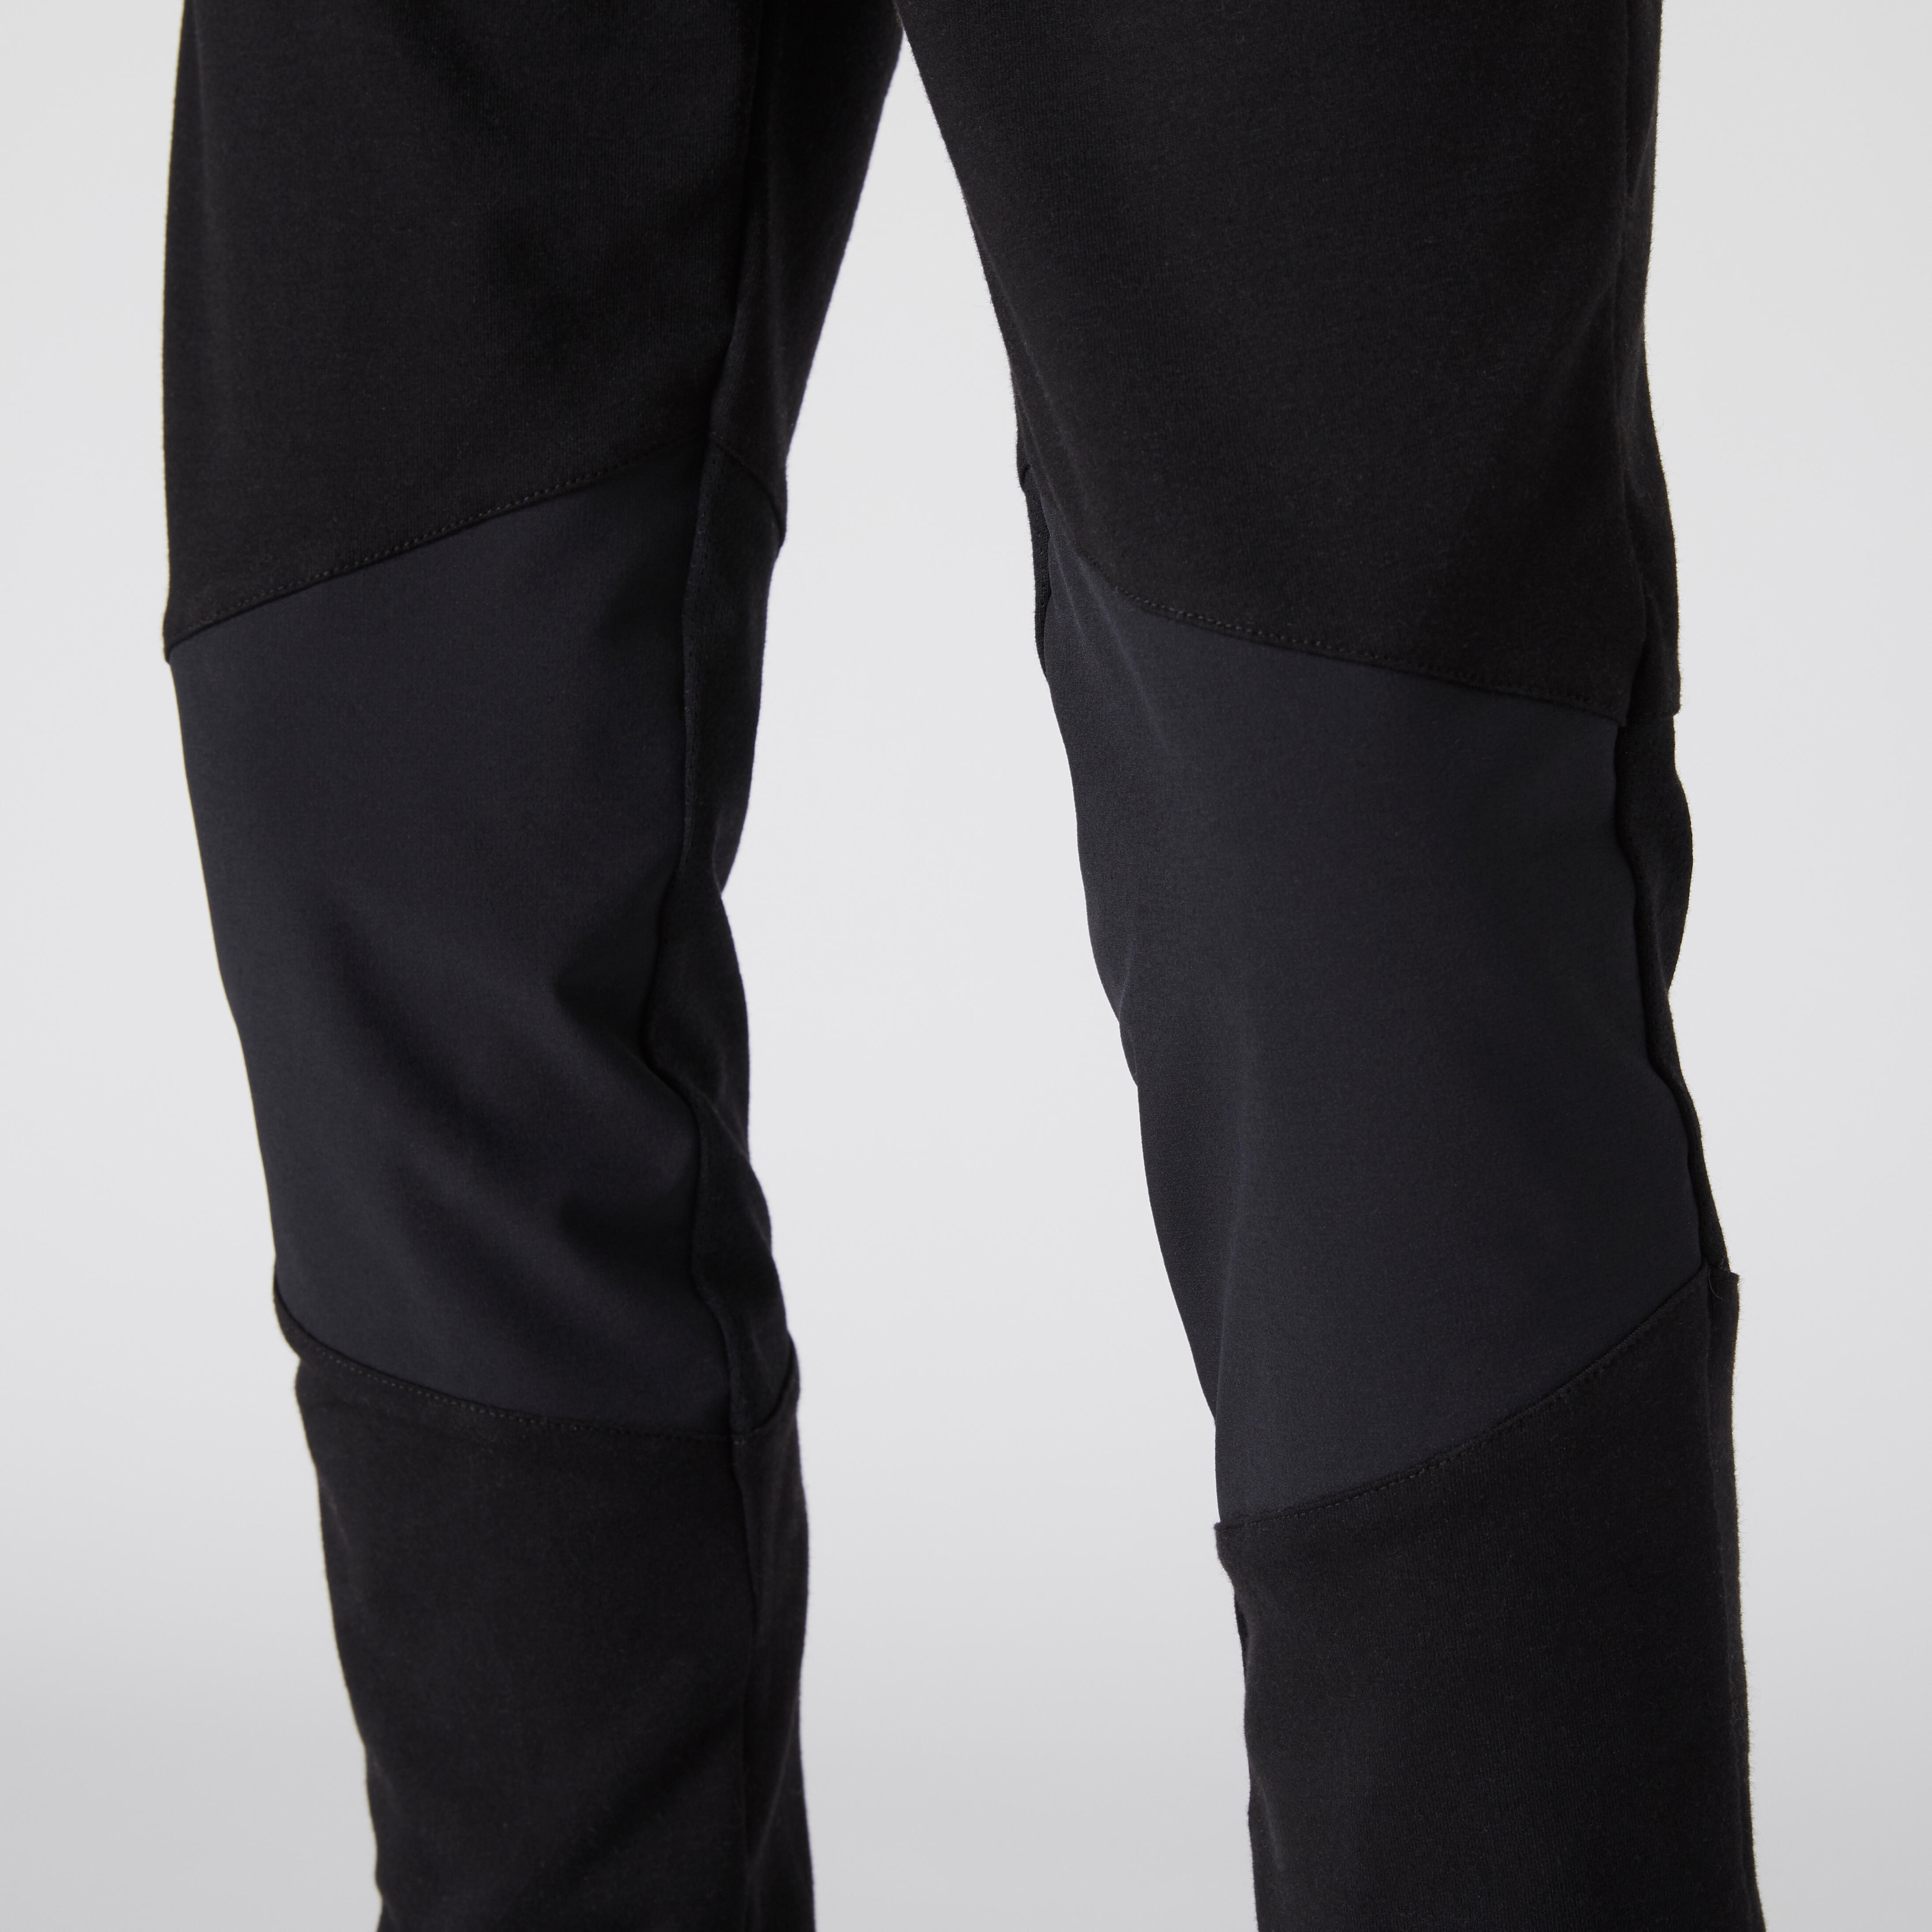 Pantalon de course en coton léger enfant – 500 noir - DOMYOS